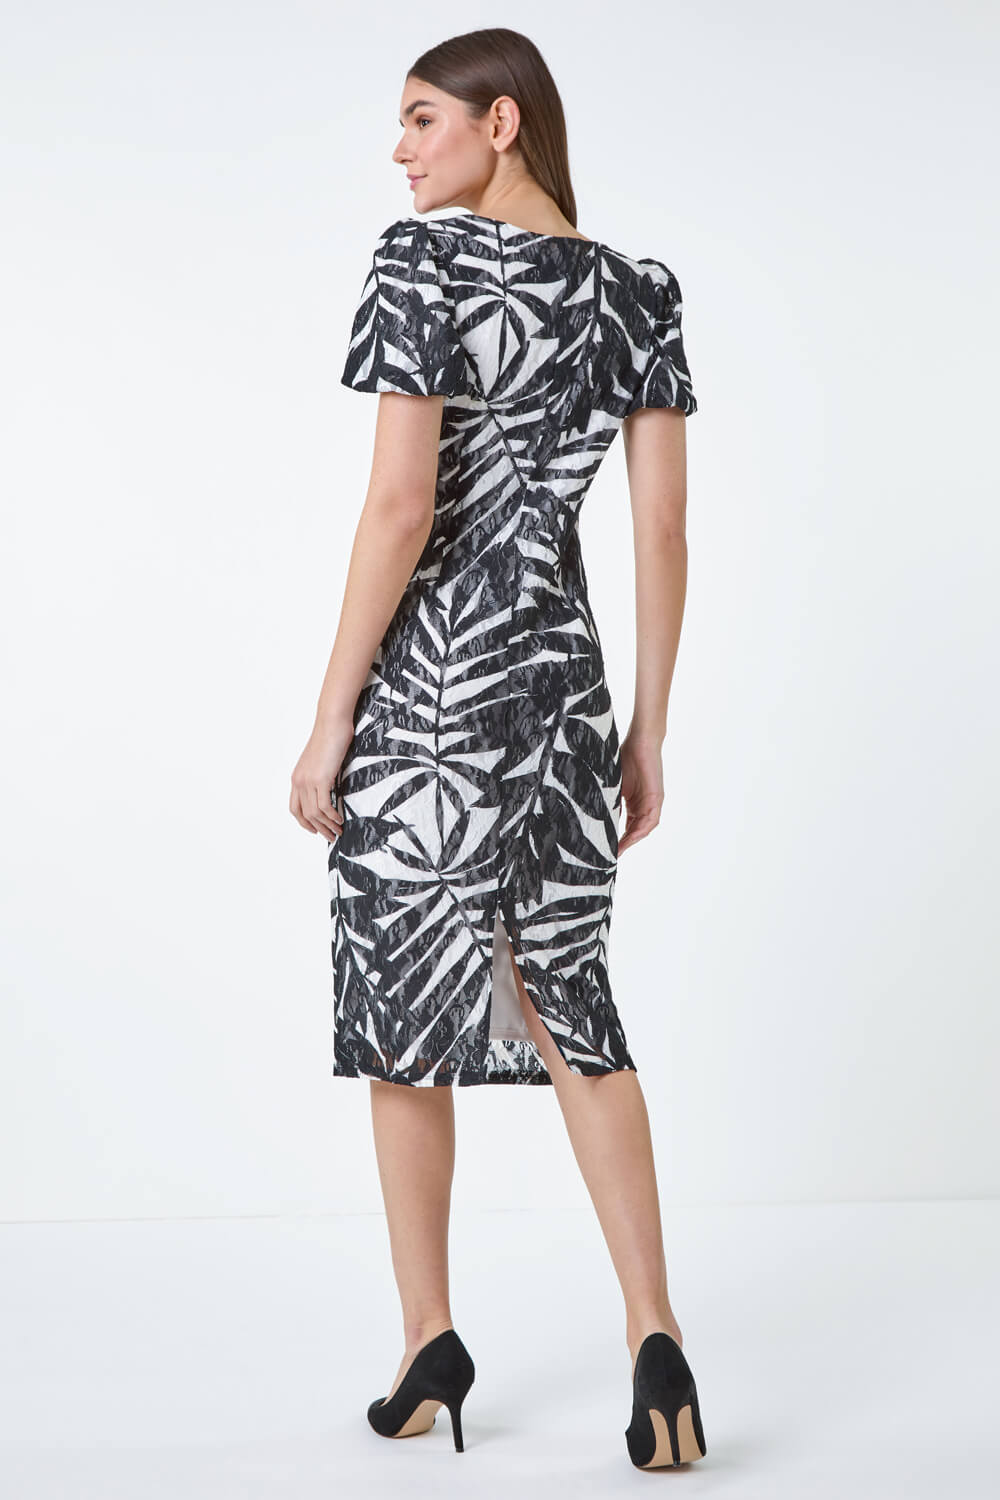 Black Leaf Print Stretch Lace Tie Dress, Image 3 of 5